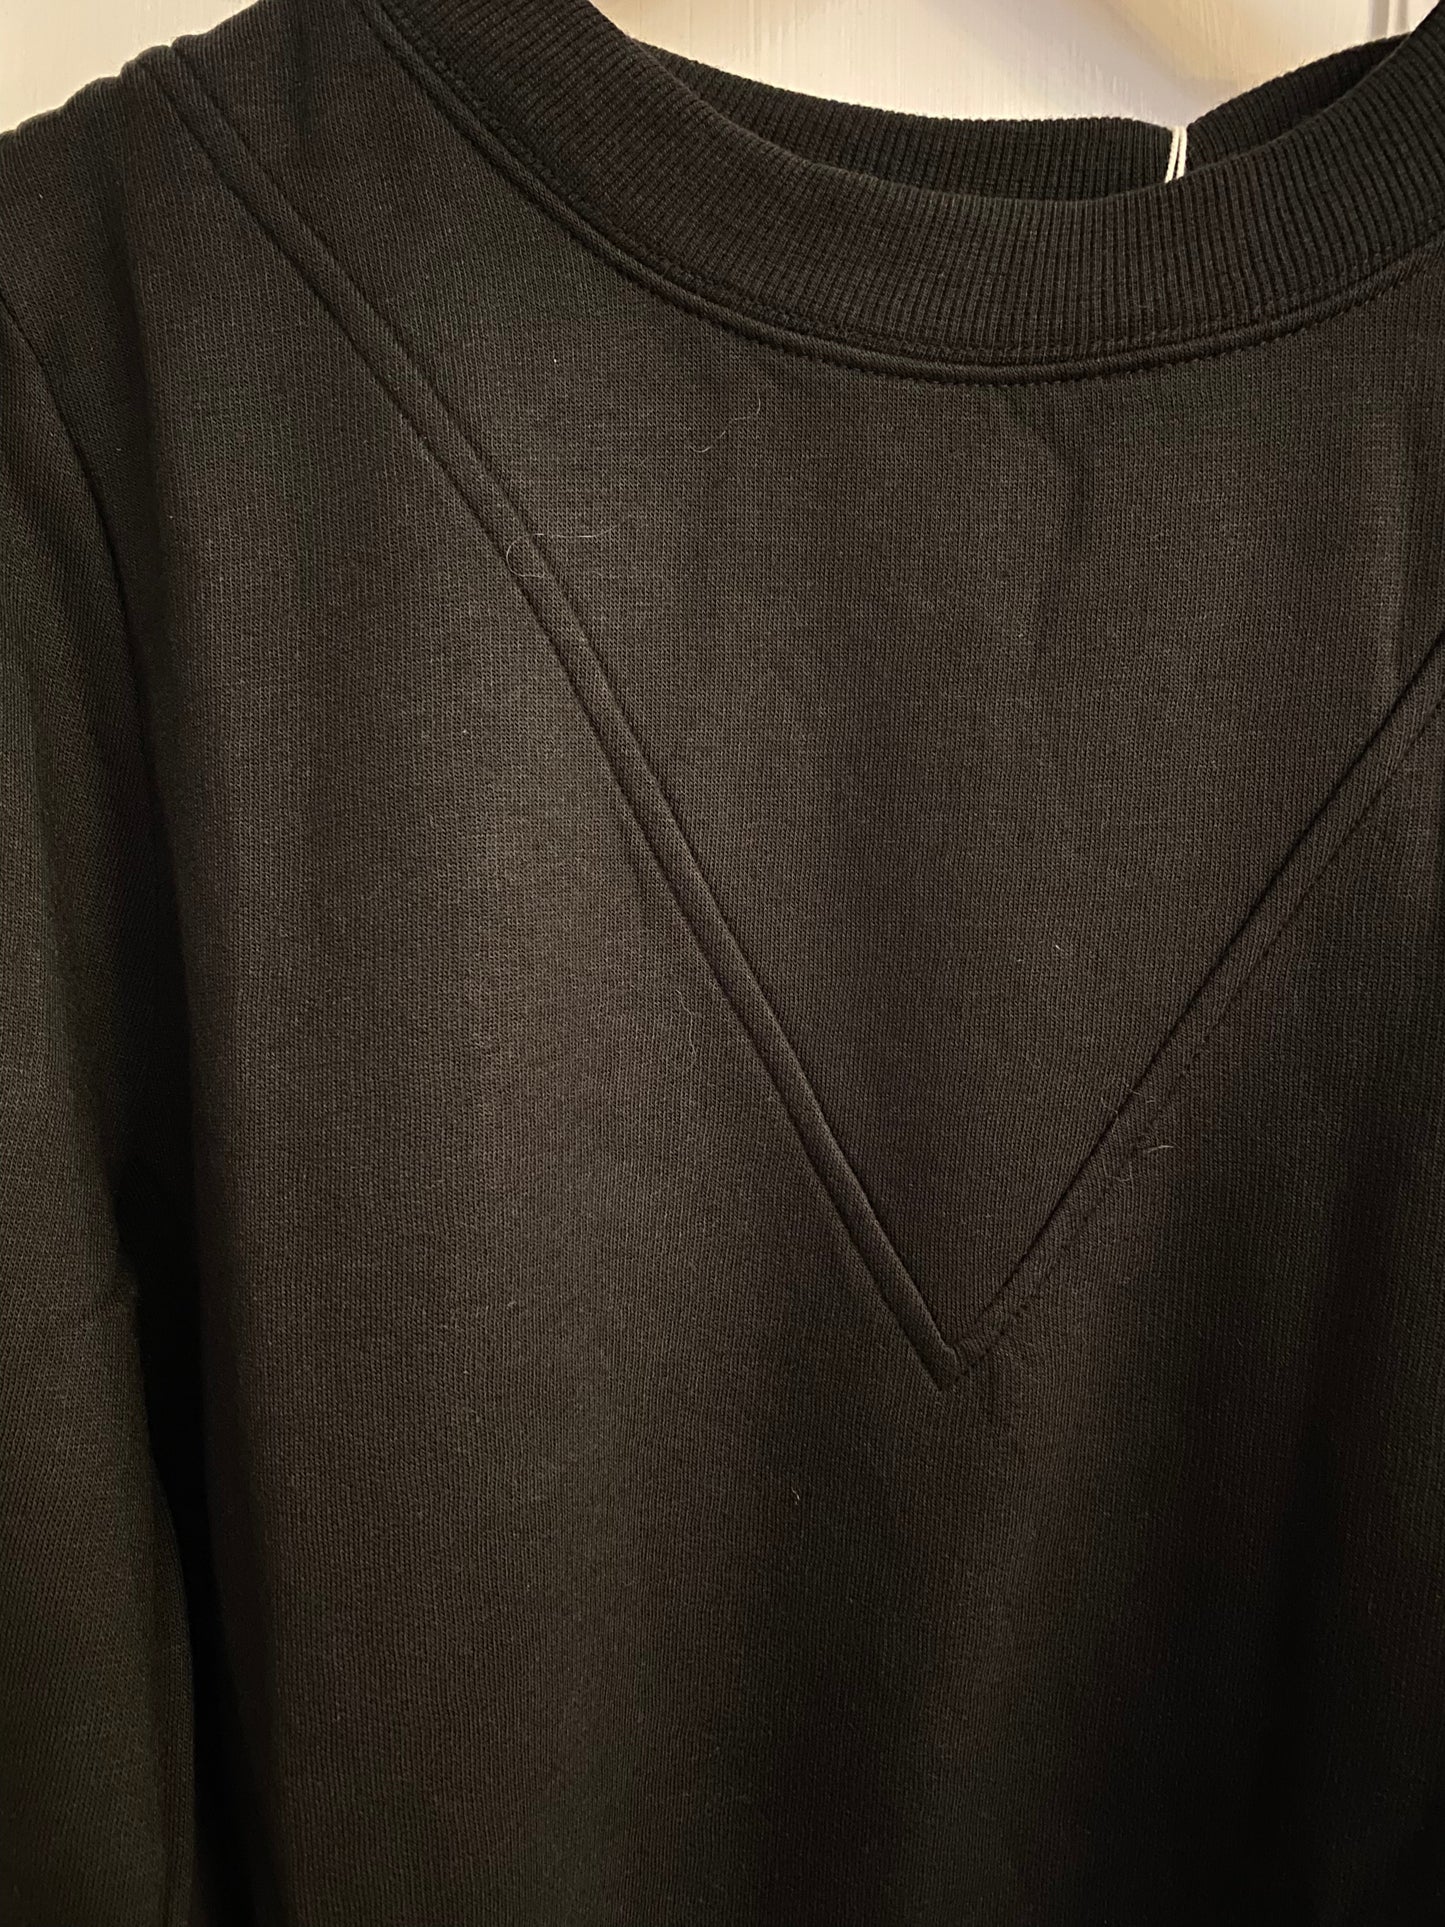 Ihjondell Sweater Black